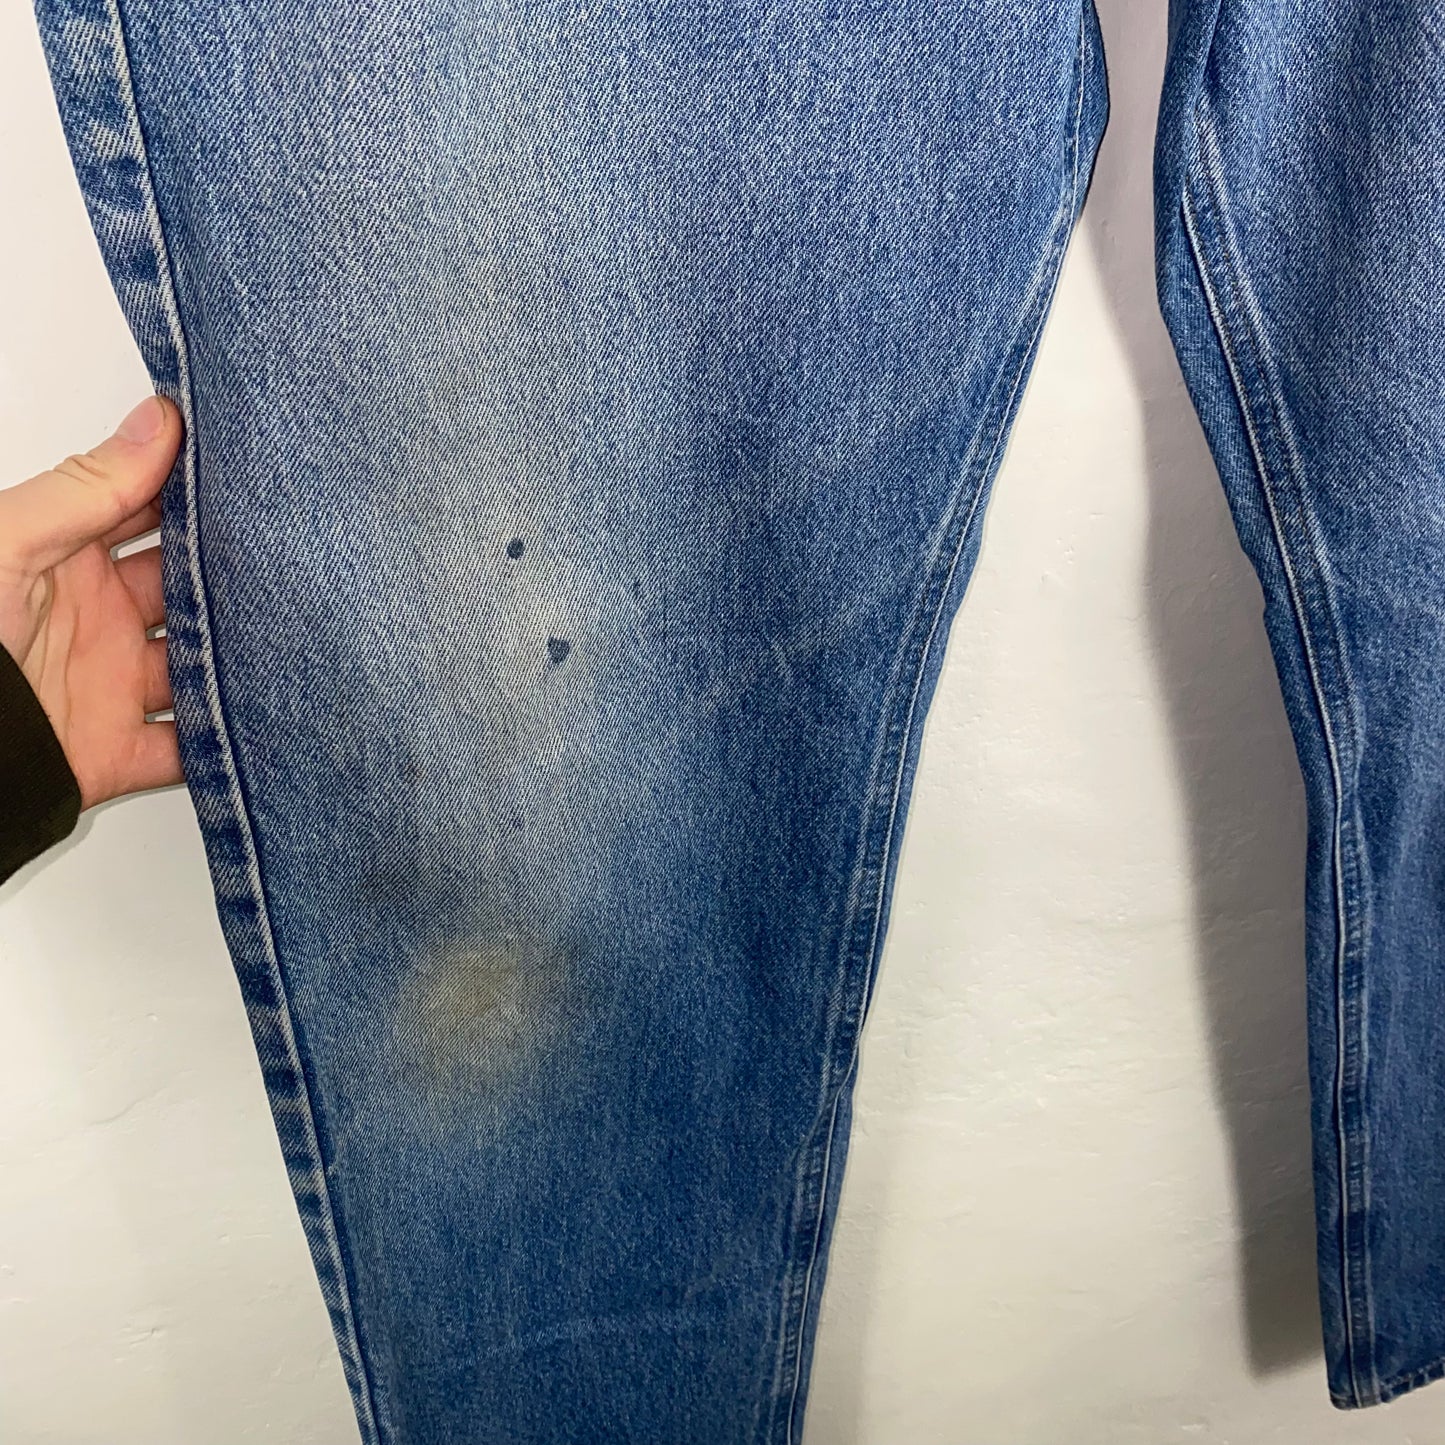 Carhartt jeans 36x34